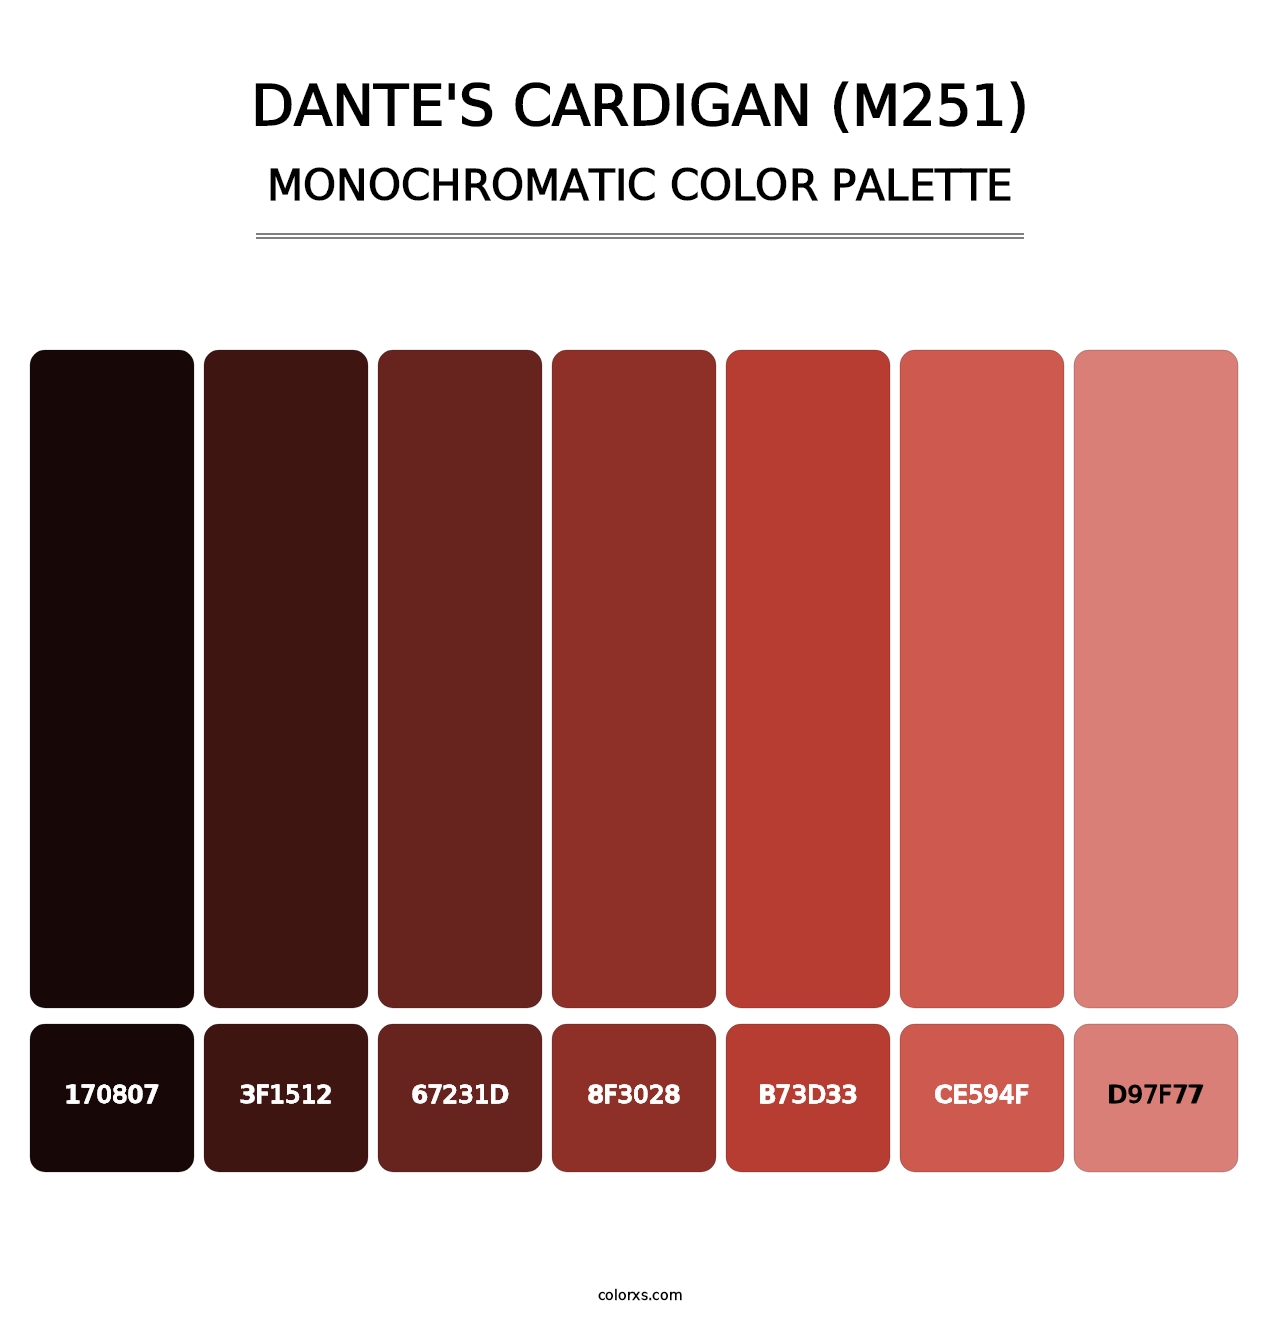 Dante's Cardigan (M251) - Monochromatic Color Palette